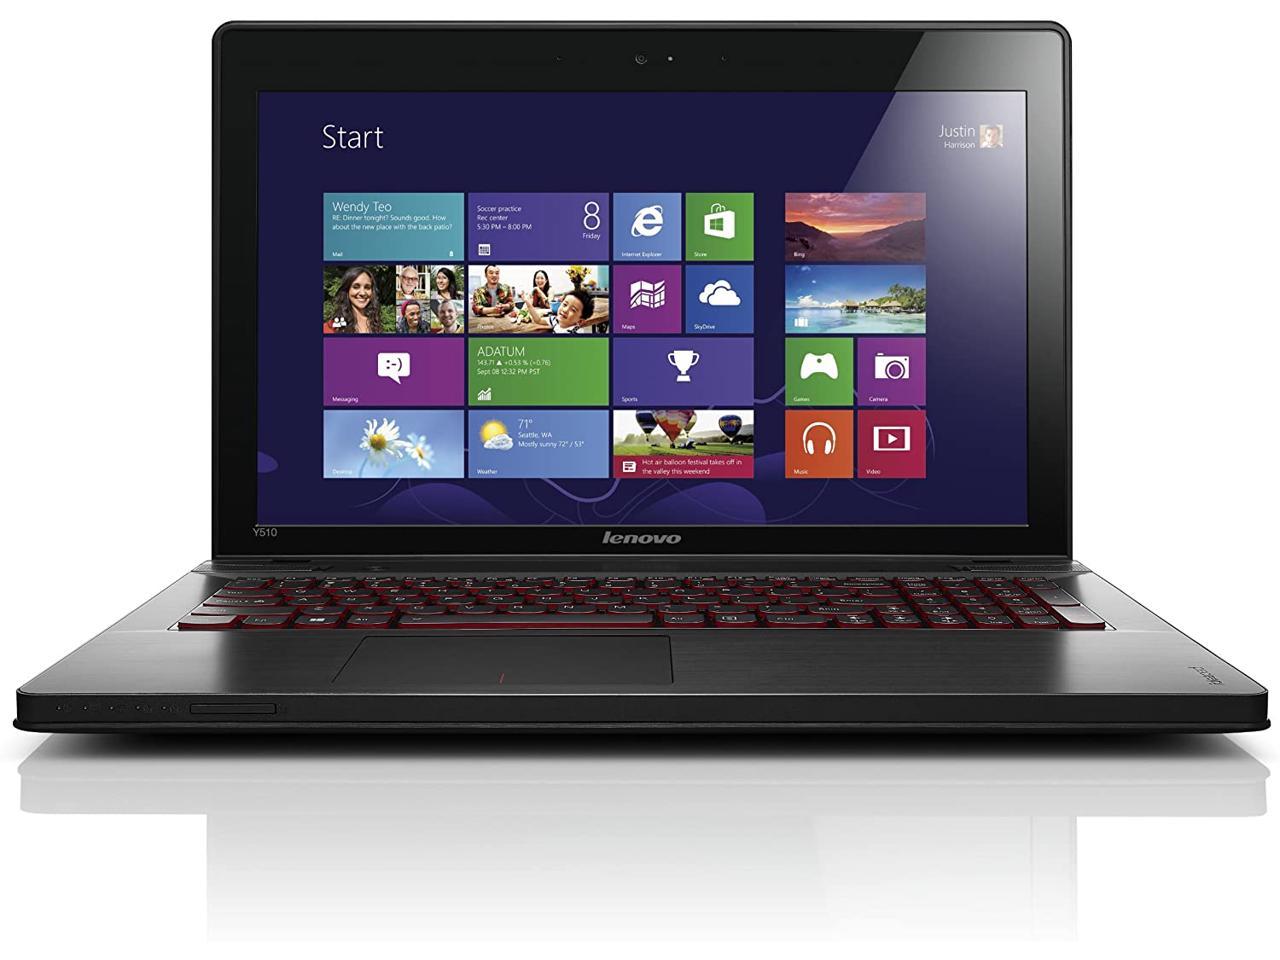 Lenovo Ideapad Y510P 15.6" Fhd Gaming Laptop ( Intel Core I7-4700M 2.4Ghz, 16Gb Ram, 1Tb Ssd, Dual